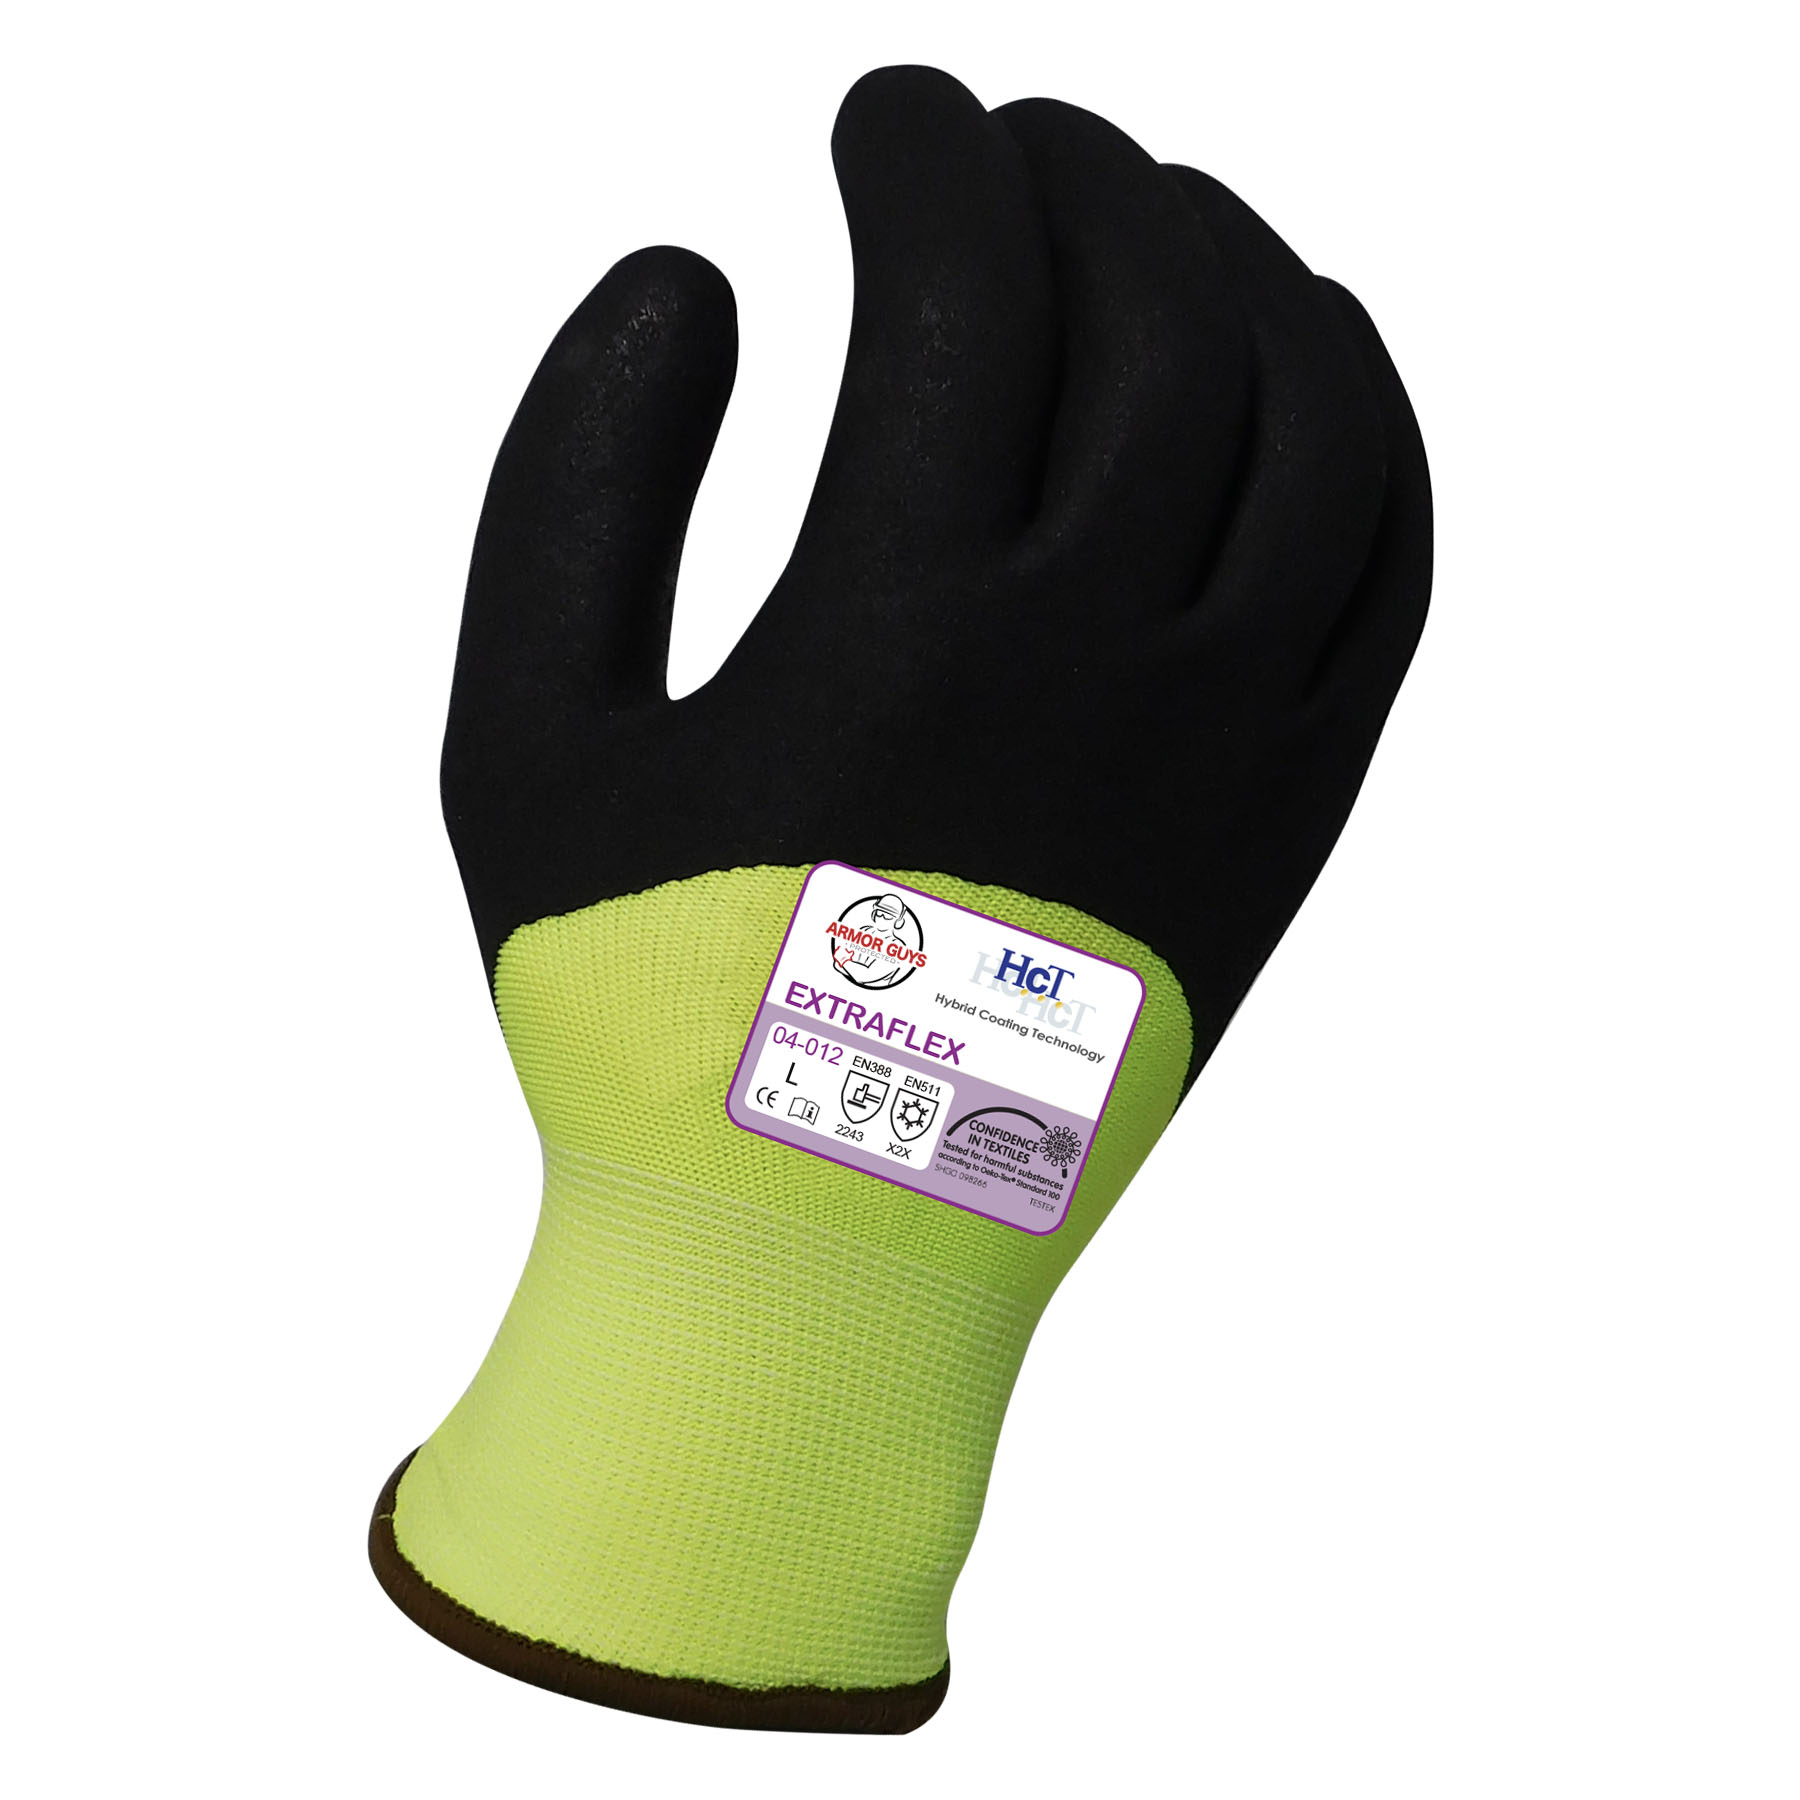 Armor Guys Extraflex® Gloves